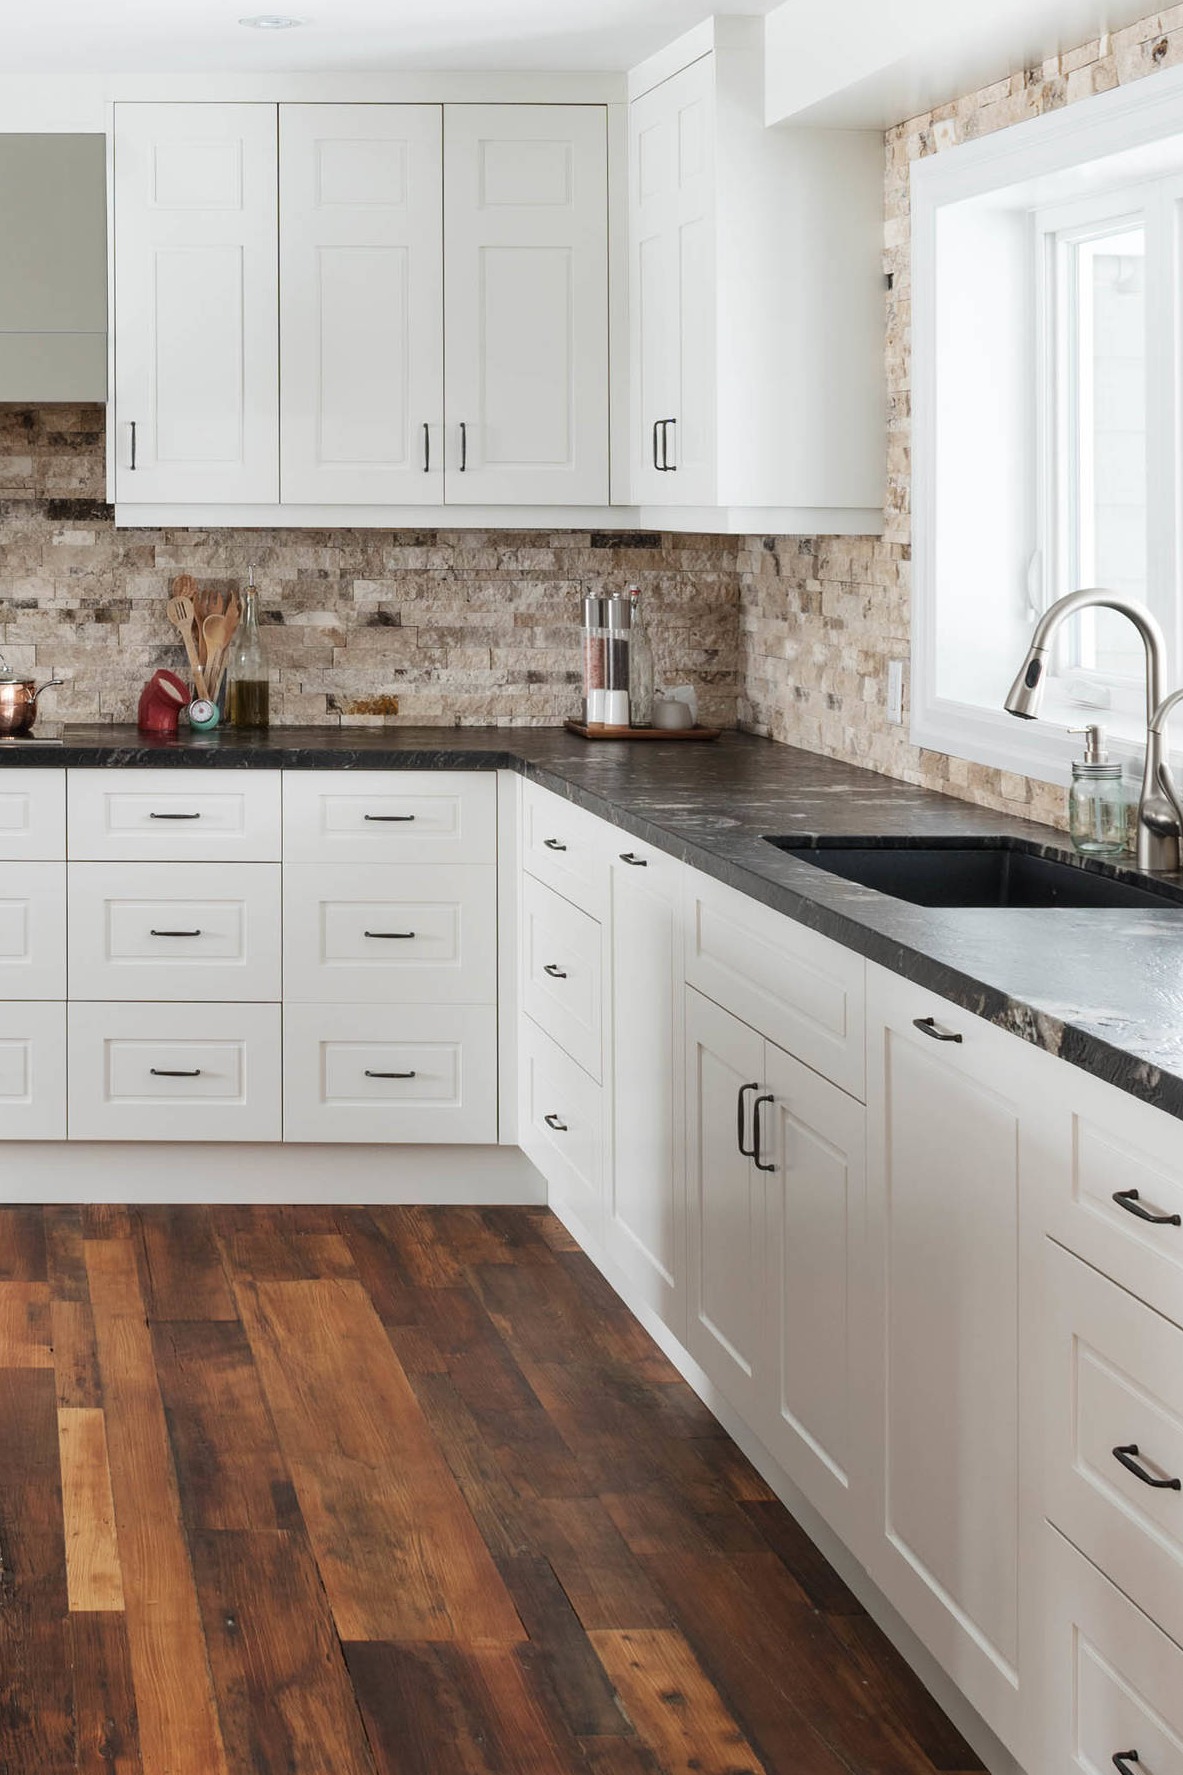 Honed Titanium Granite Countertop White Cabinet Brick Style Backsplash Dark Hardwood Floor 1